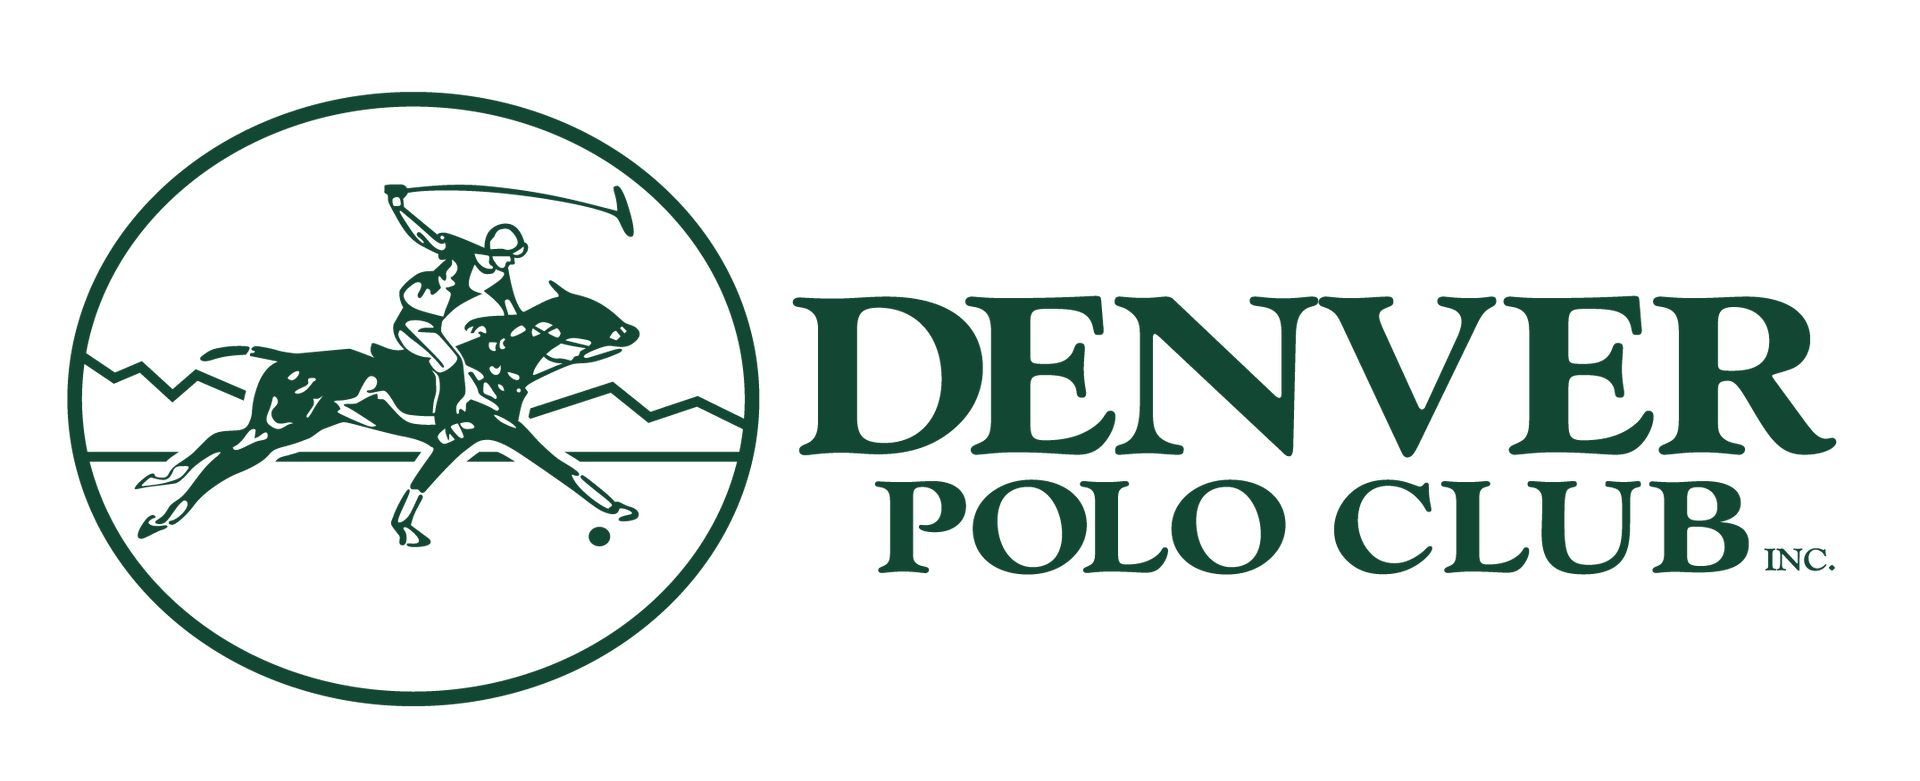 The logo for the denver polo club shows a man riding a horse.